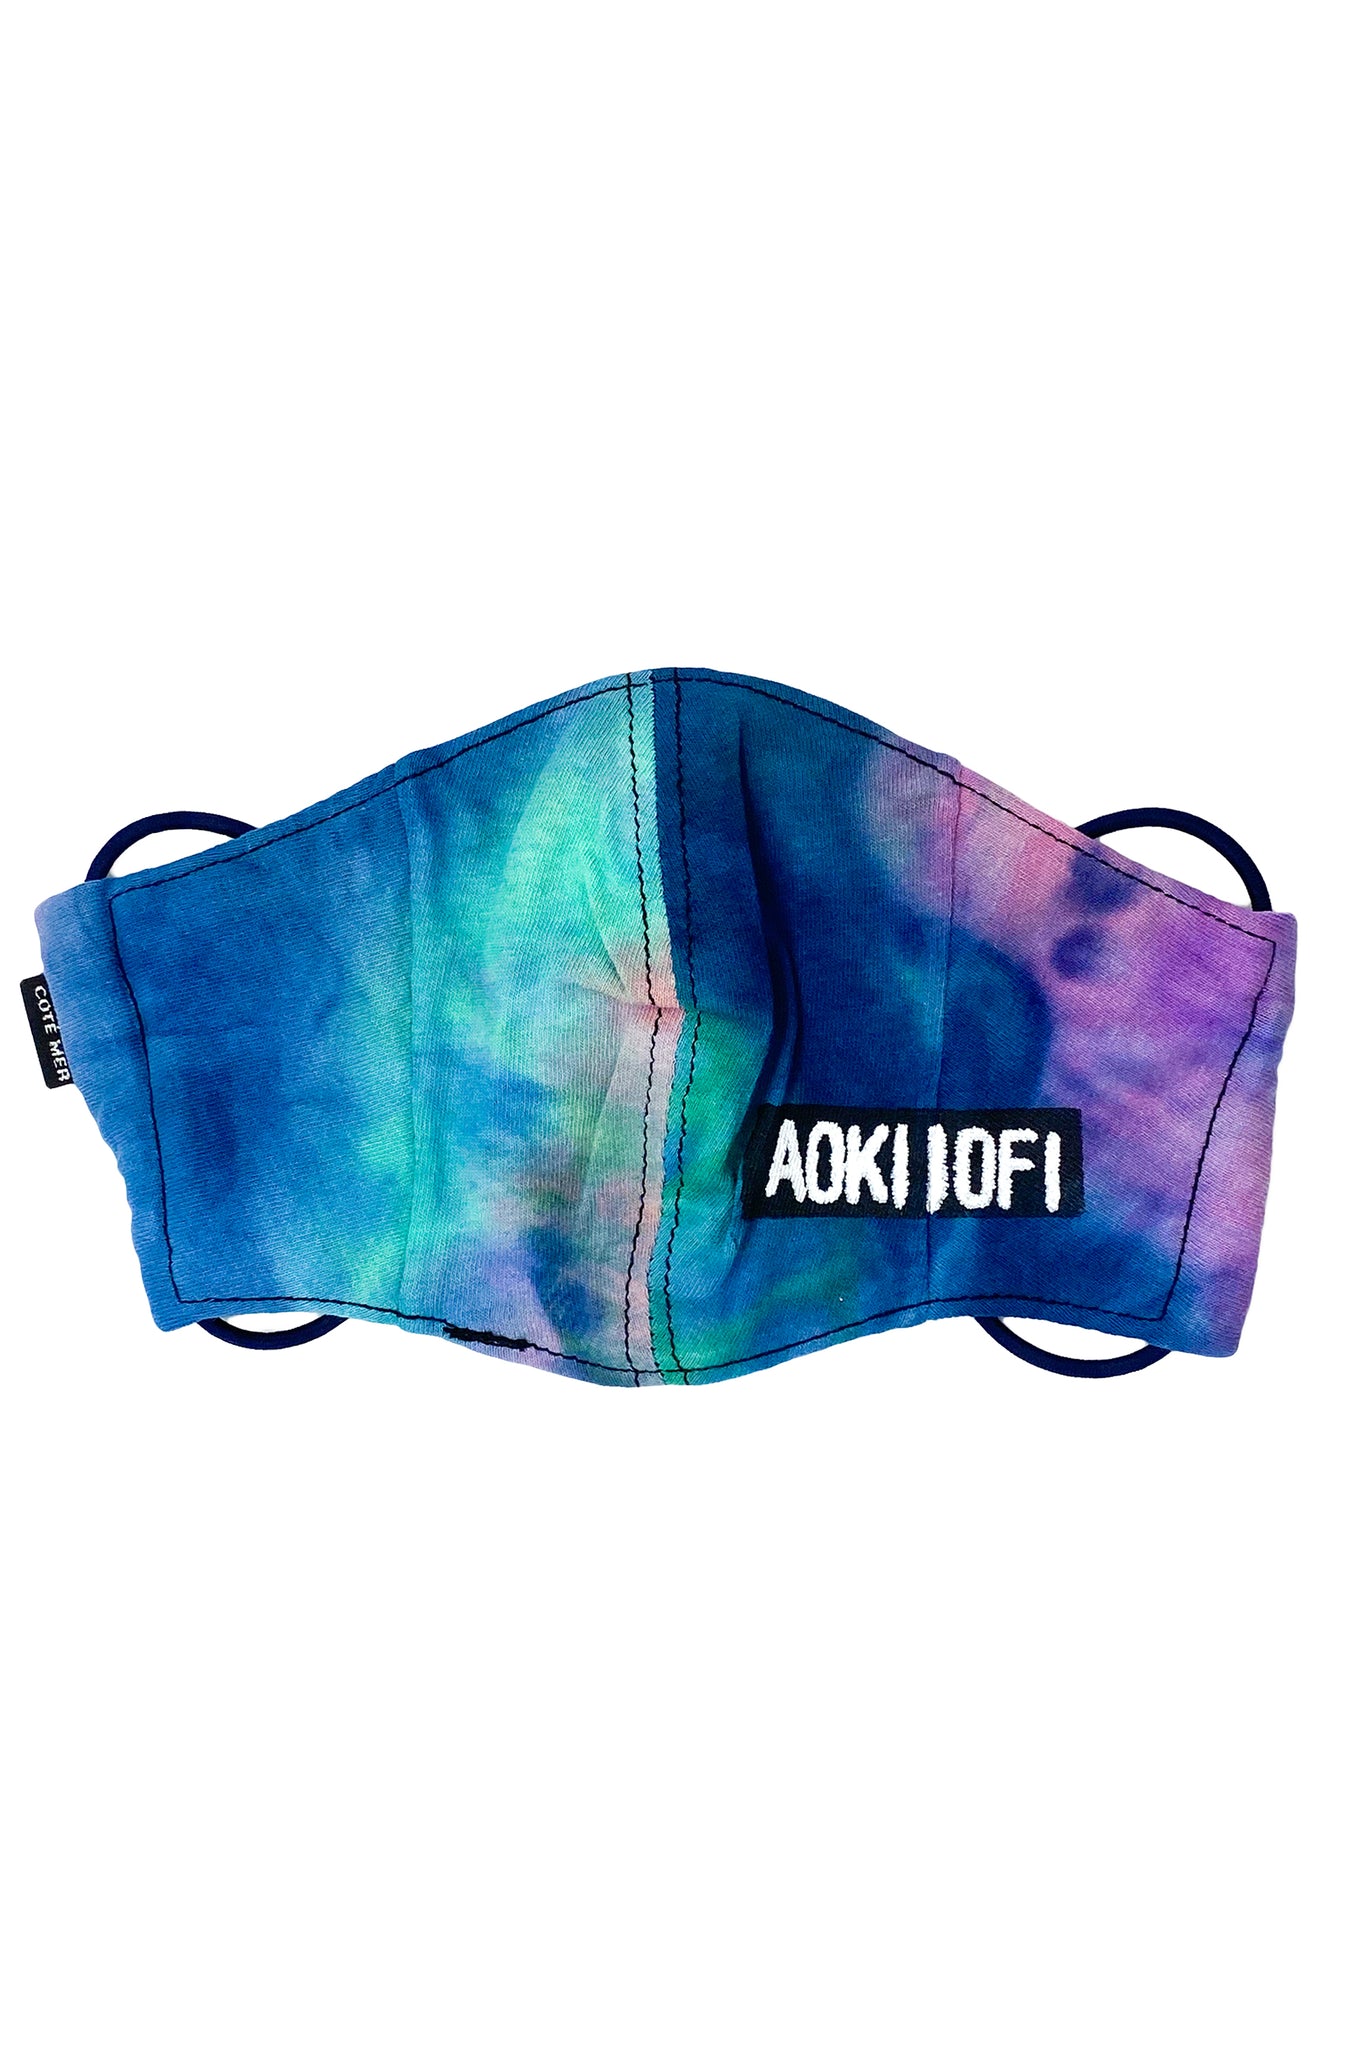 Aoki 1 of 1 Mask #360